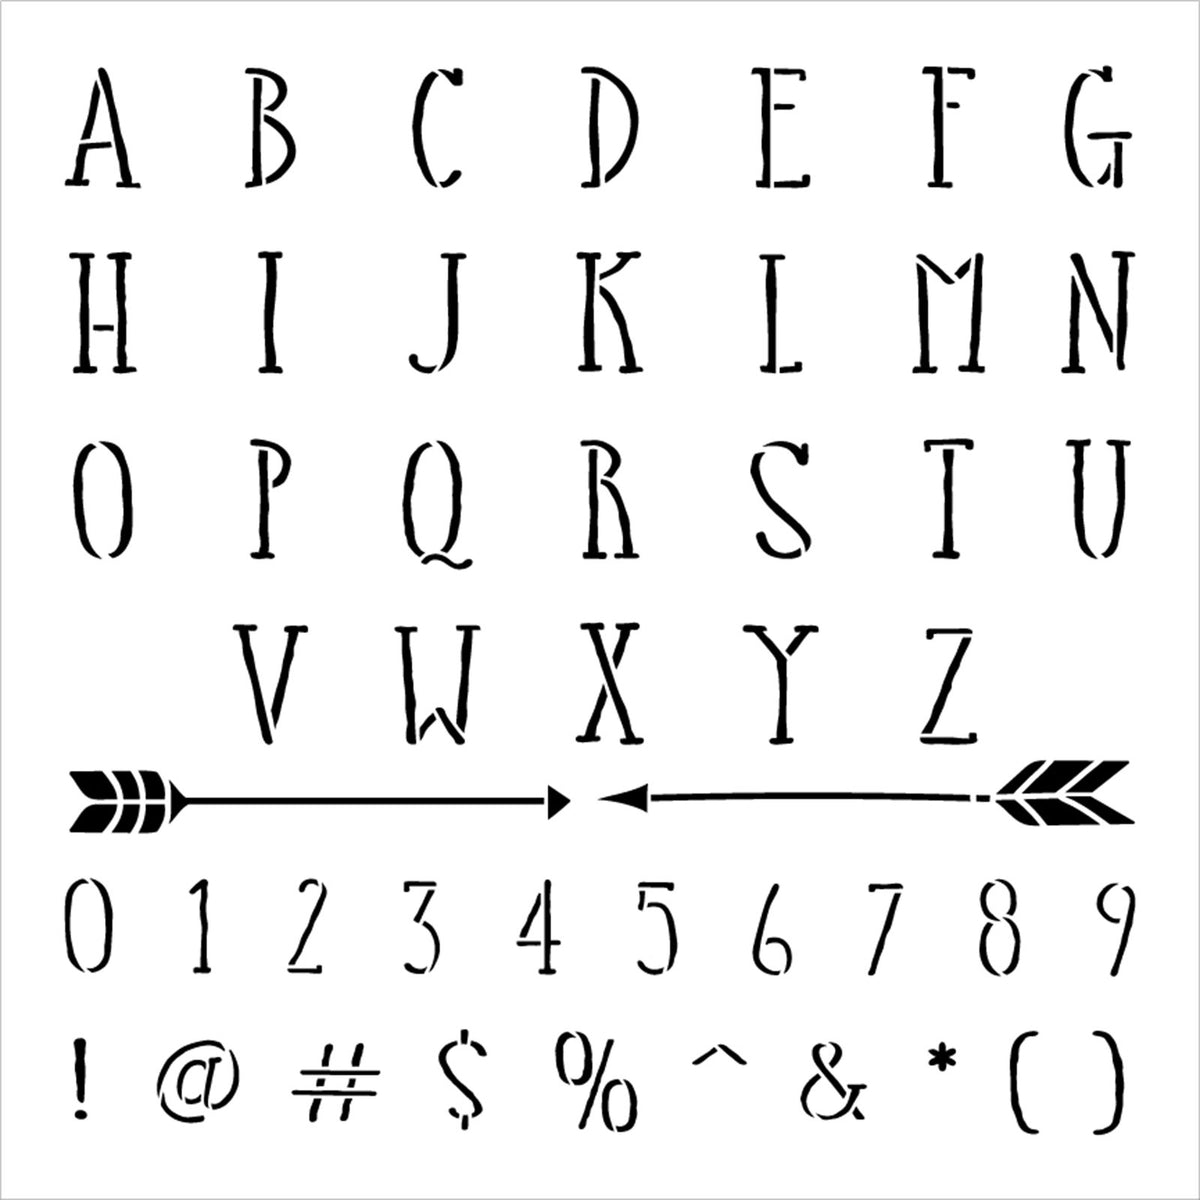 crafty-serif-lettering-stencils-by-studior12-stcl5968-studior12